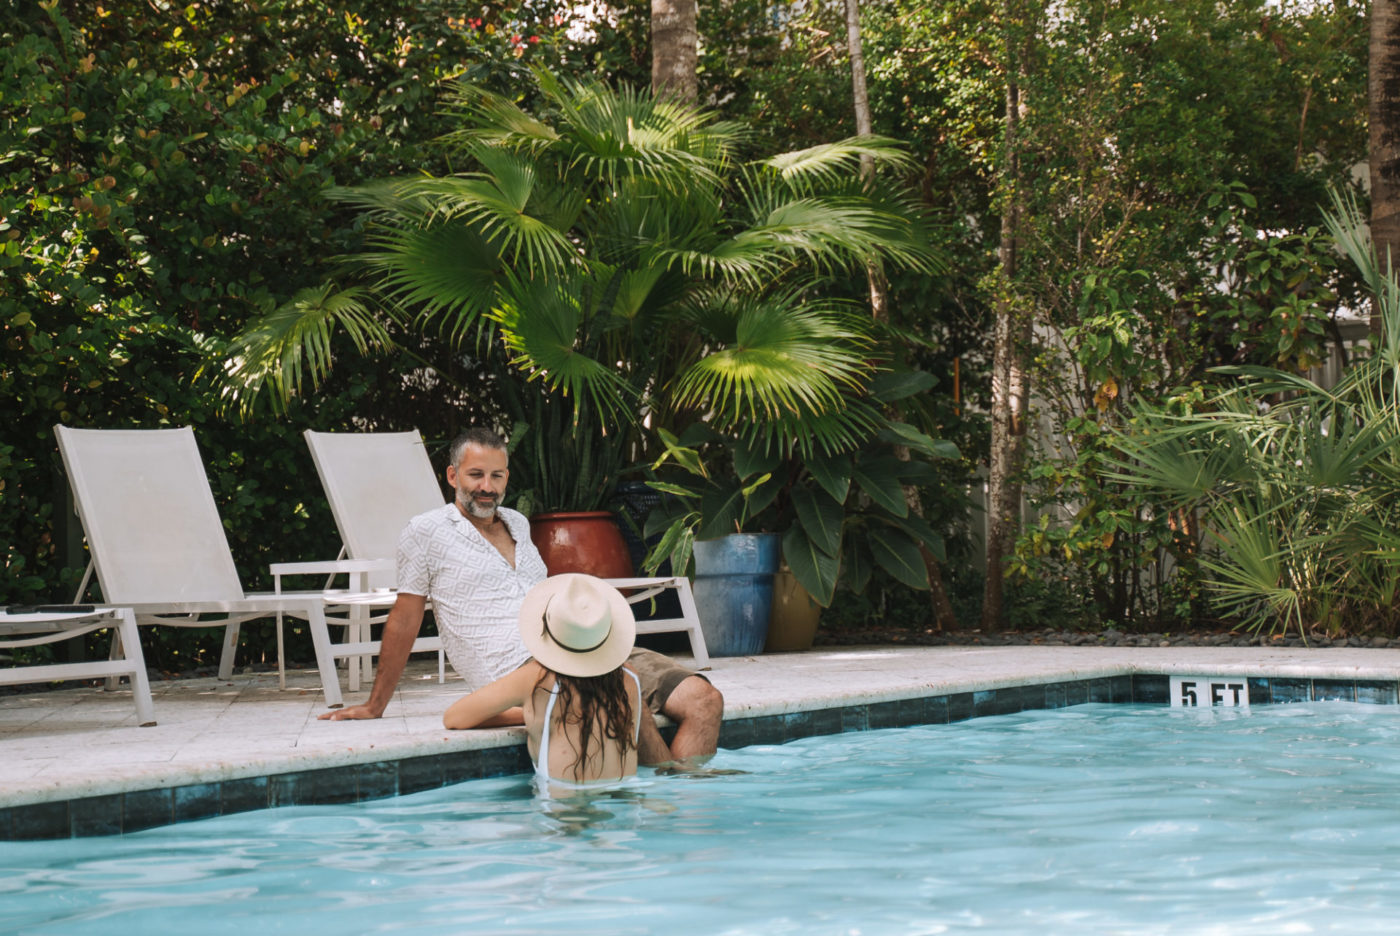 USA Florida Keys Key West Parrot Key hotel pool OM 09281